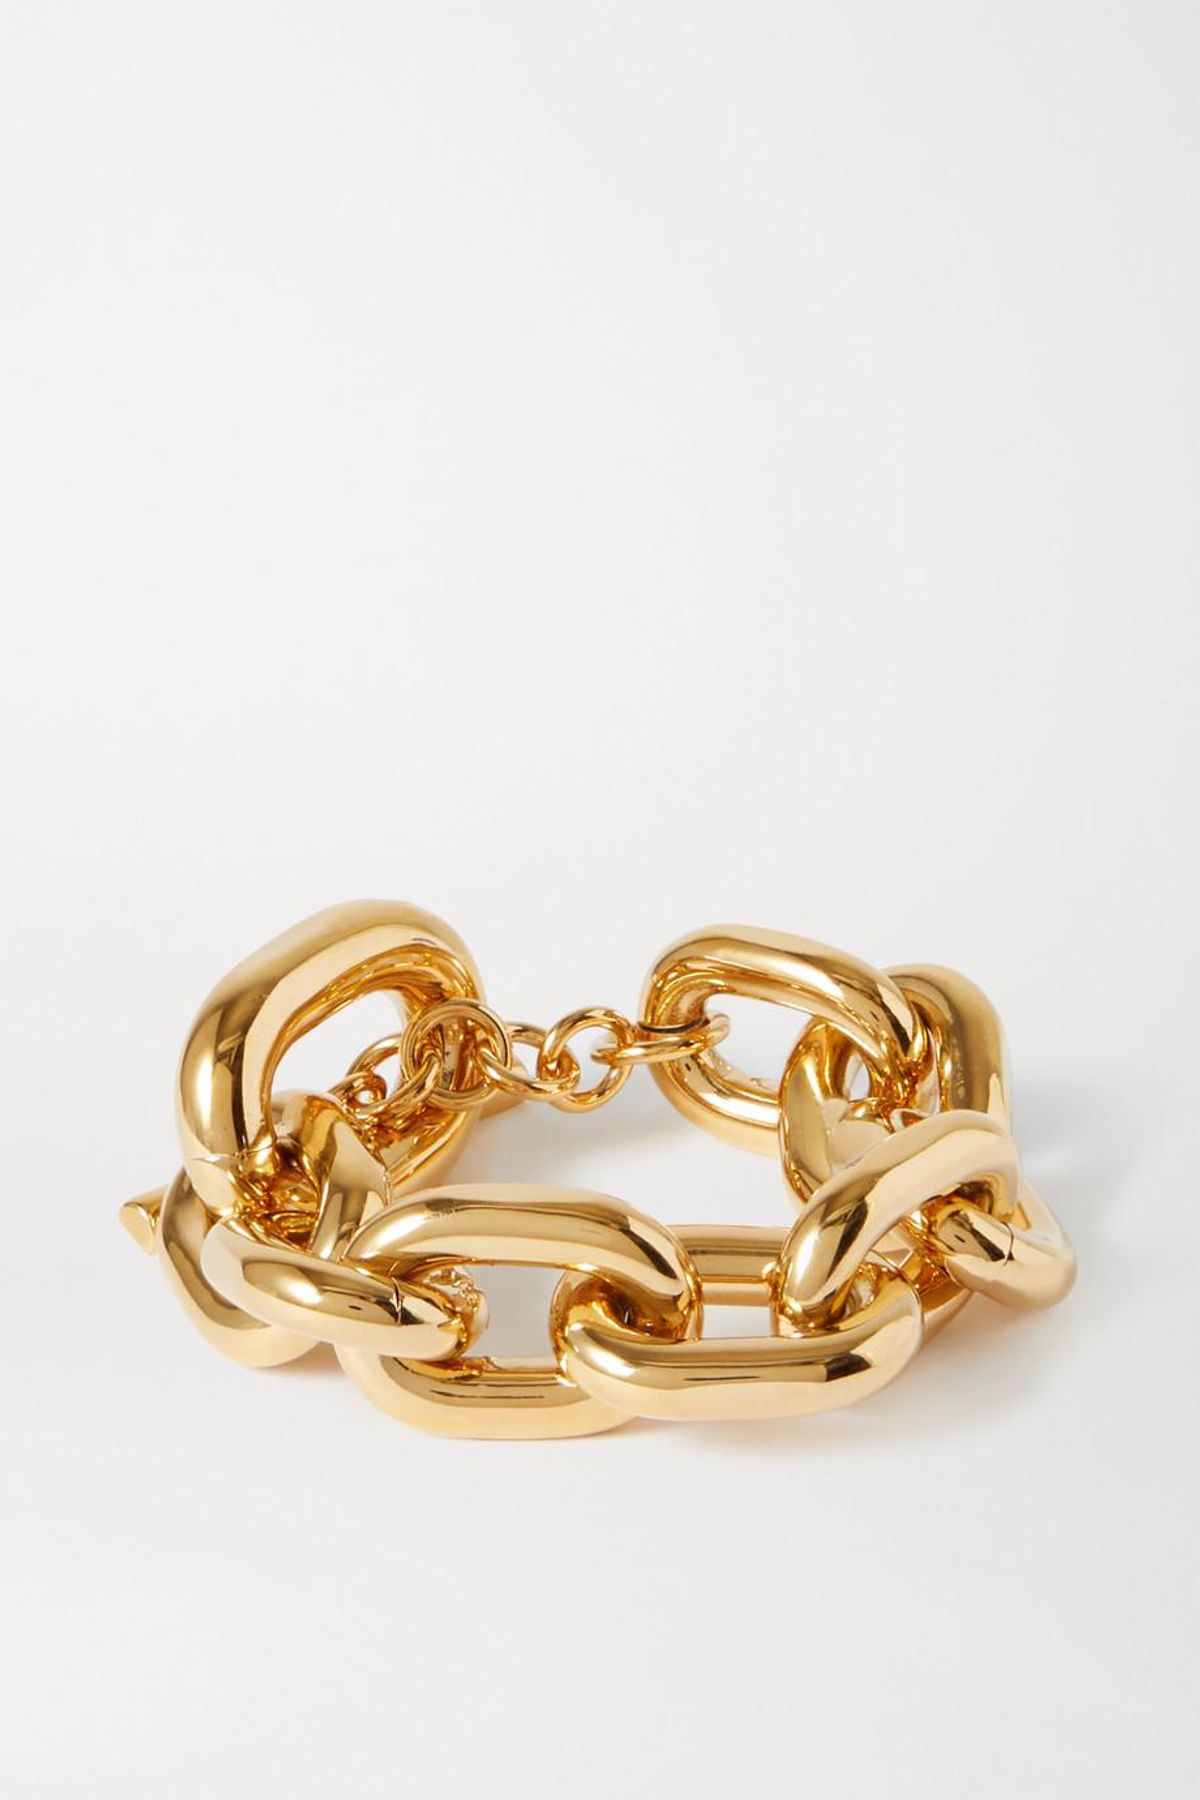 Paco Rabanne Link Gold Tone Bracelet